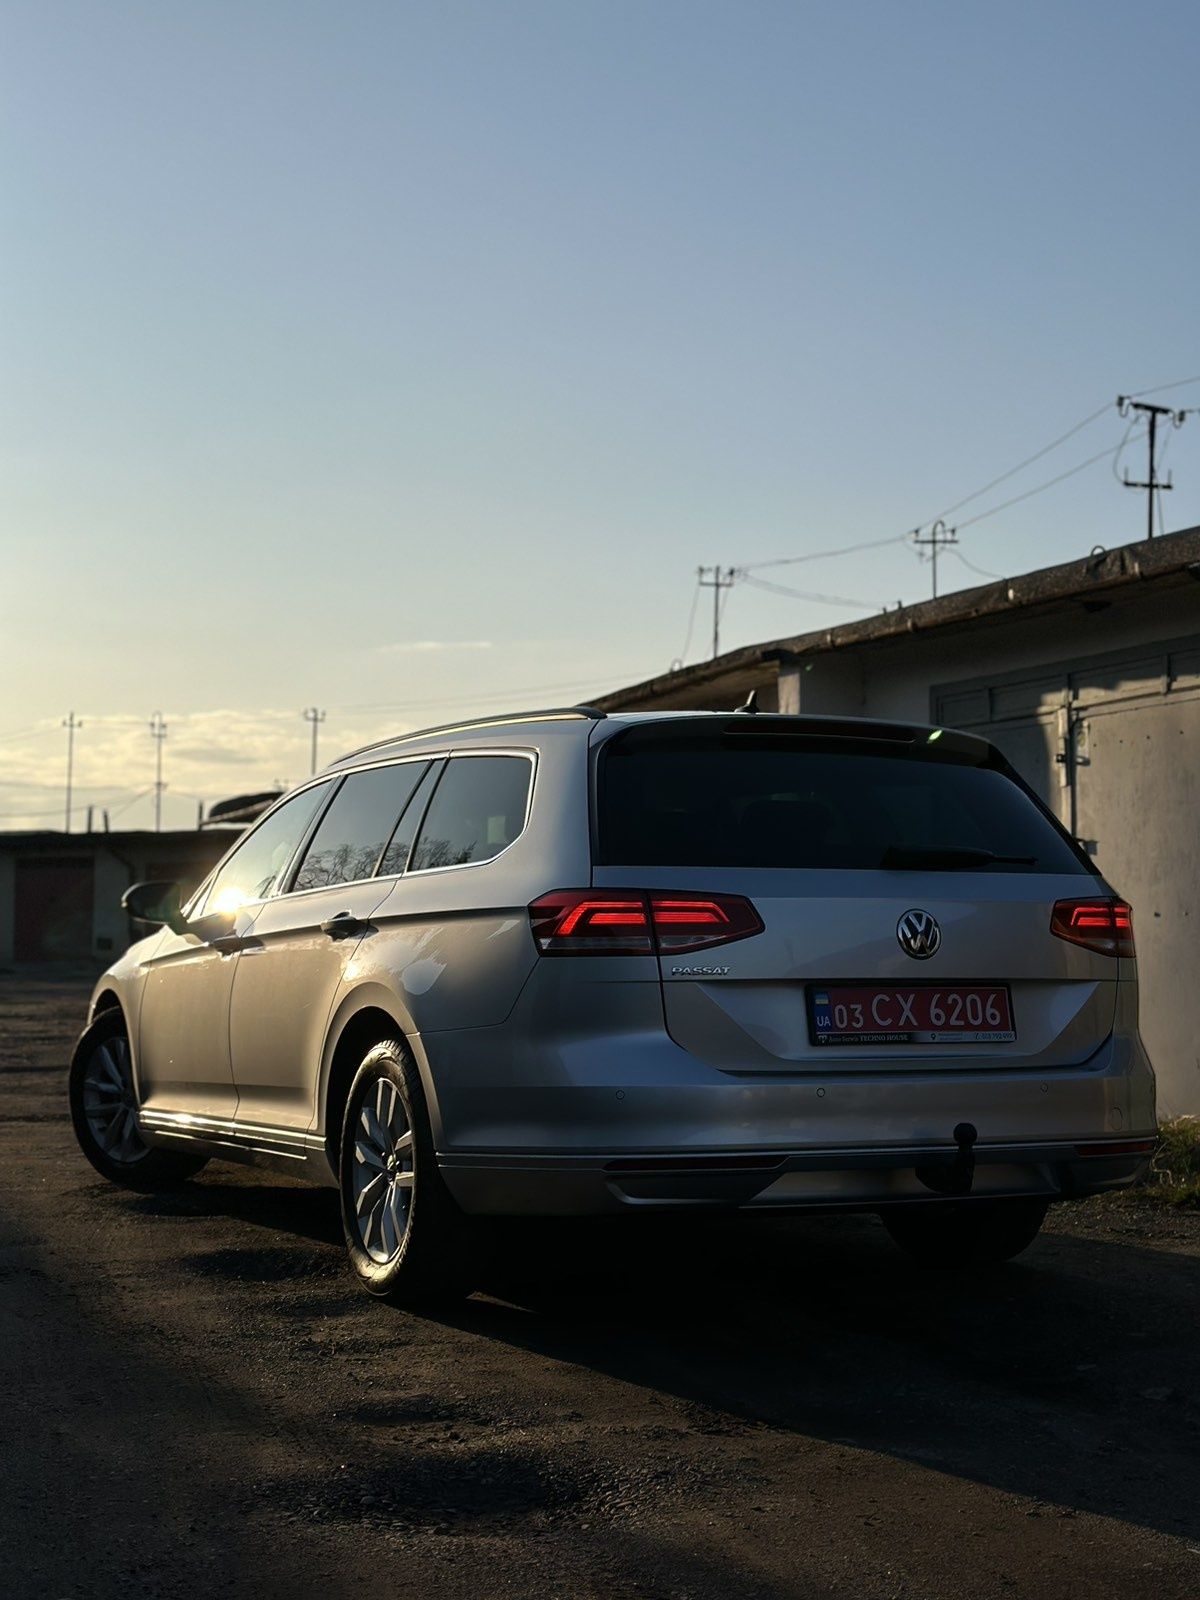 Продам Volkswagen Passat B8, 2.0диз. 13 11 2018р.в.